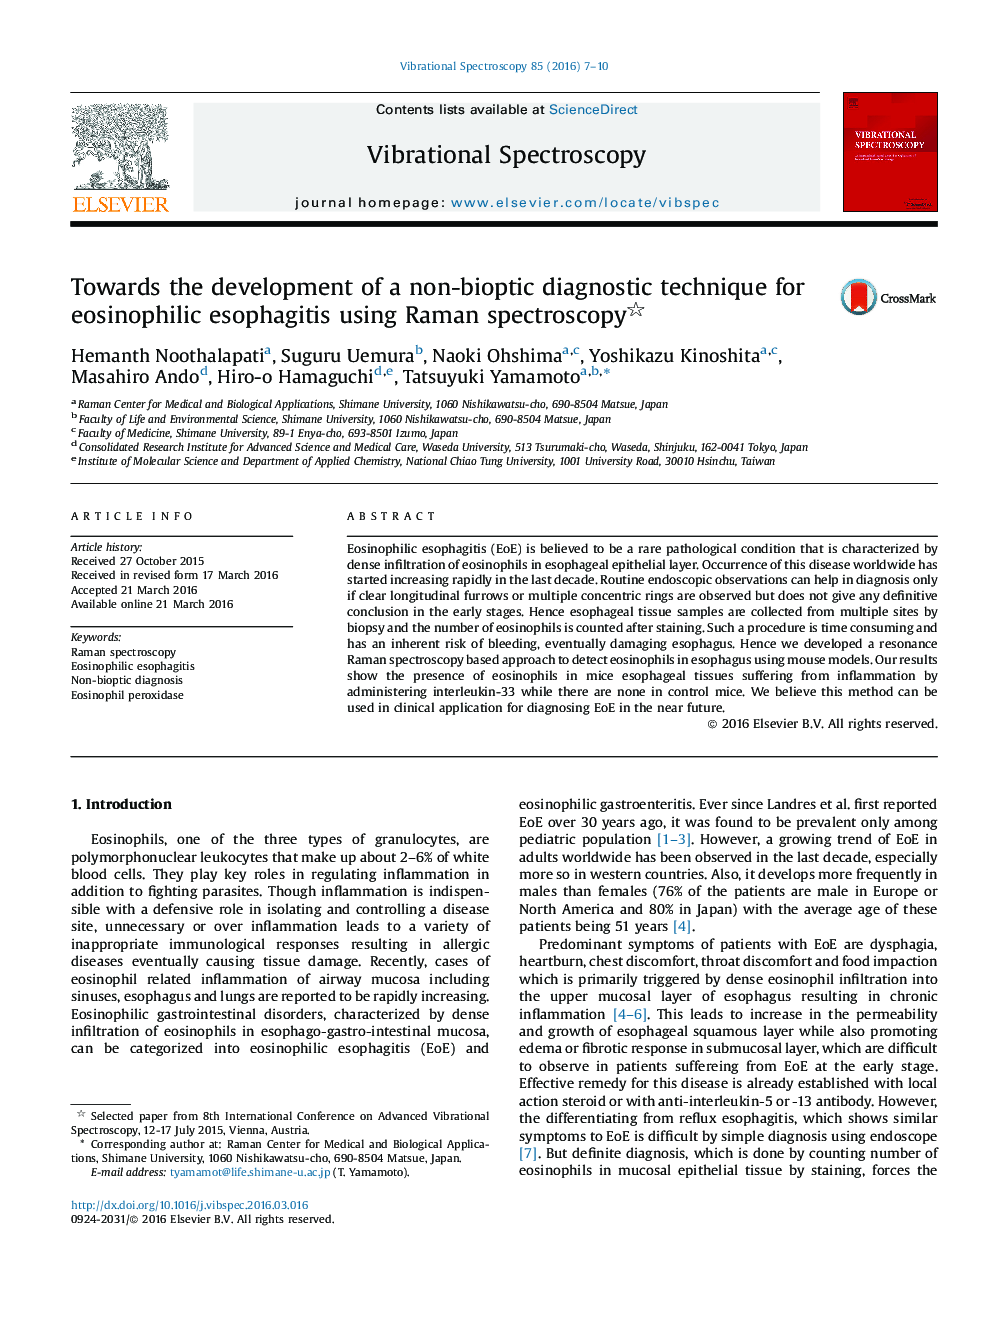 Towards the development of a non-bioptic diagnostic technique for eosinophilic esophagitis using Raman spectroscopy 